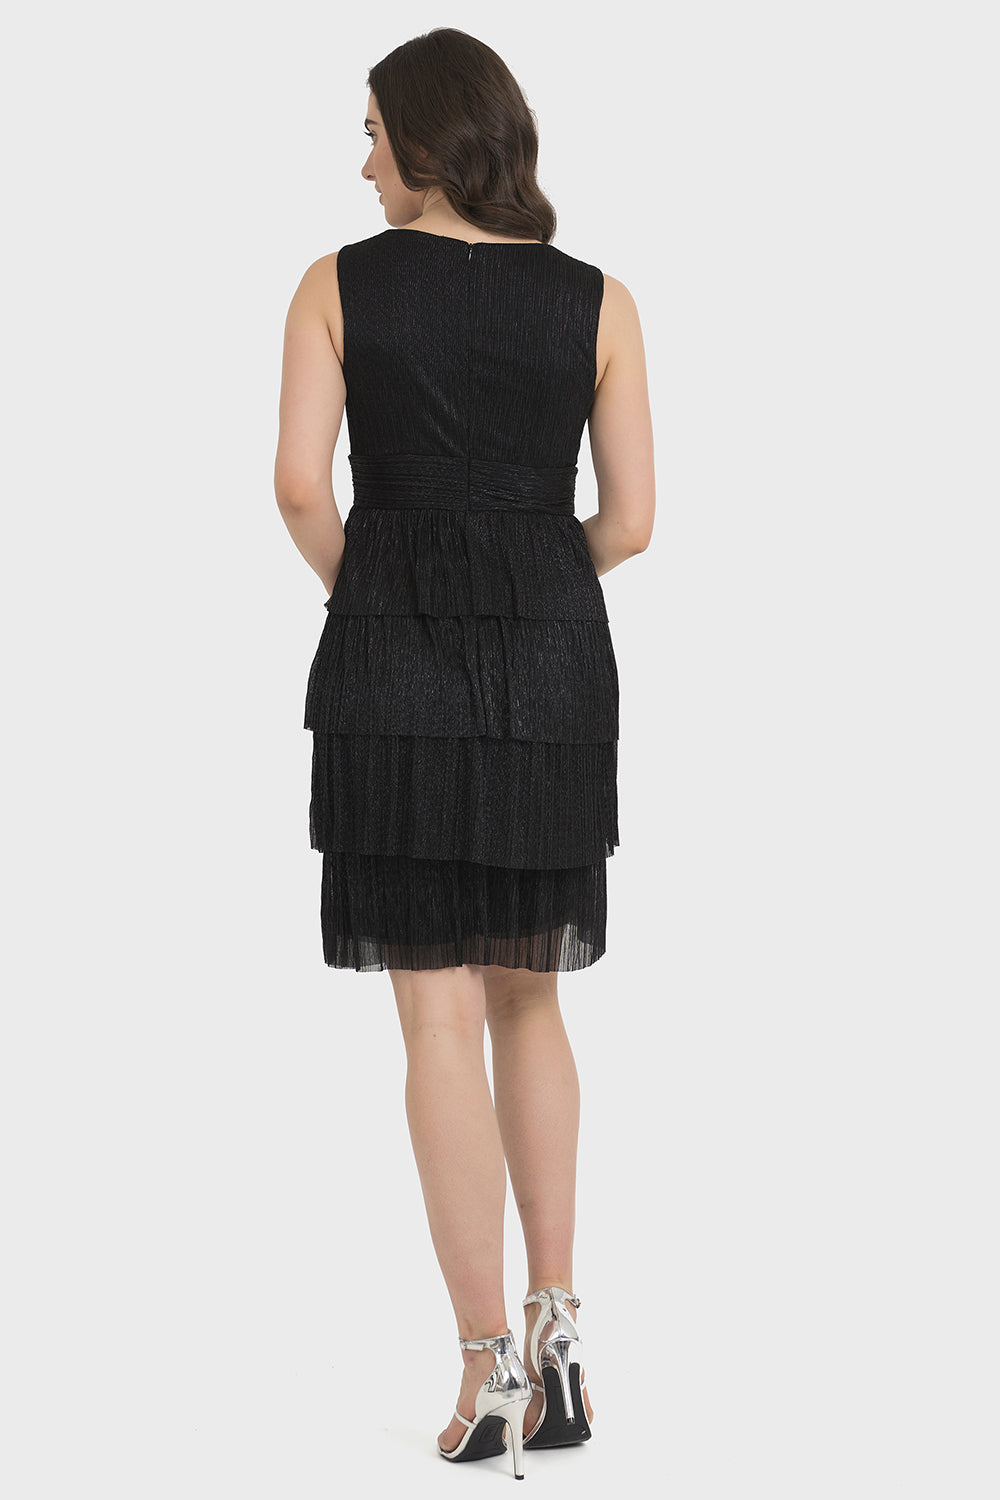 Joseph Ribkoff Black-Silver Dress Style 194560